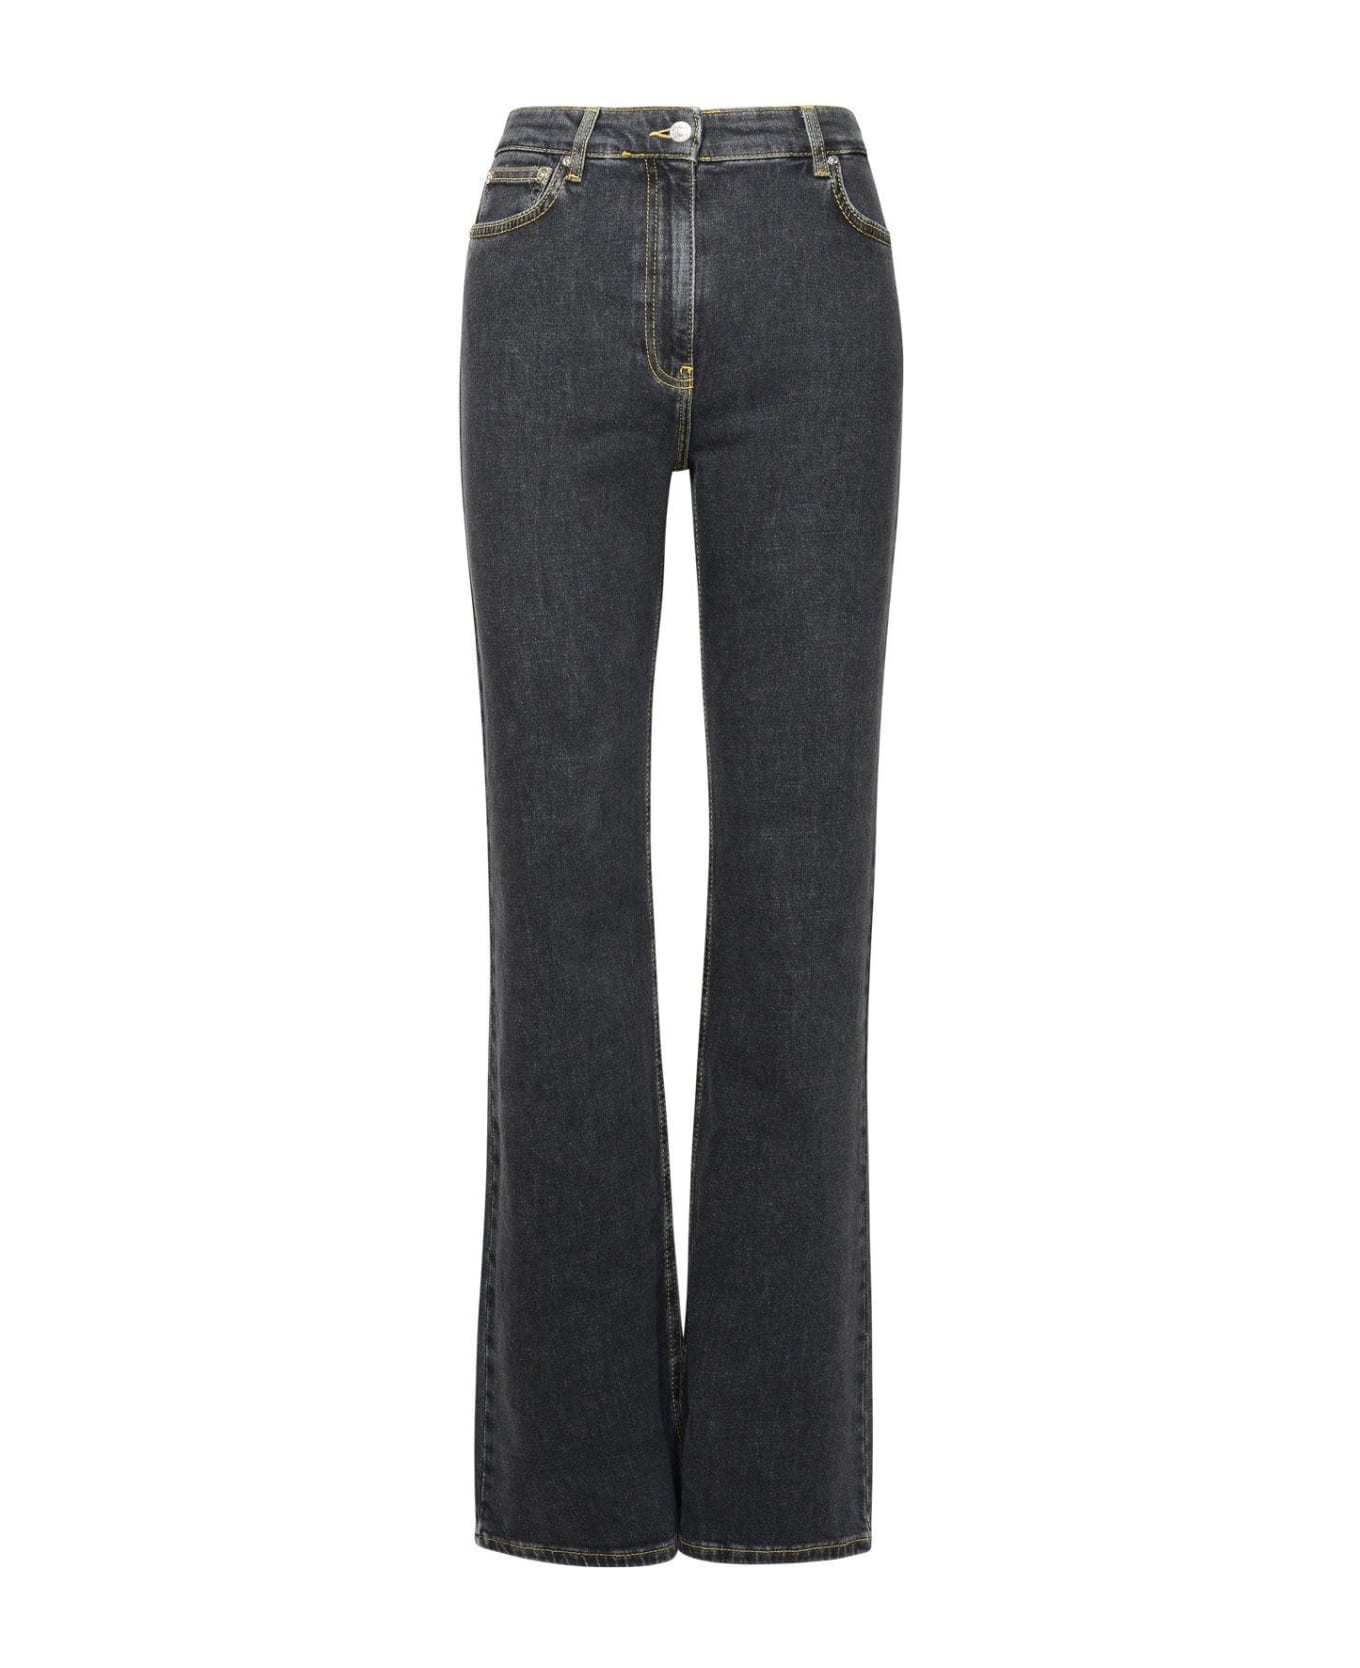 M05CH1N0 Jeans Jeans High Wiast Denim Jeans - Black